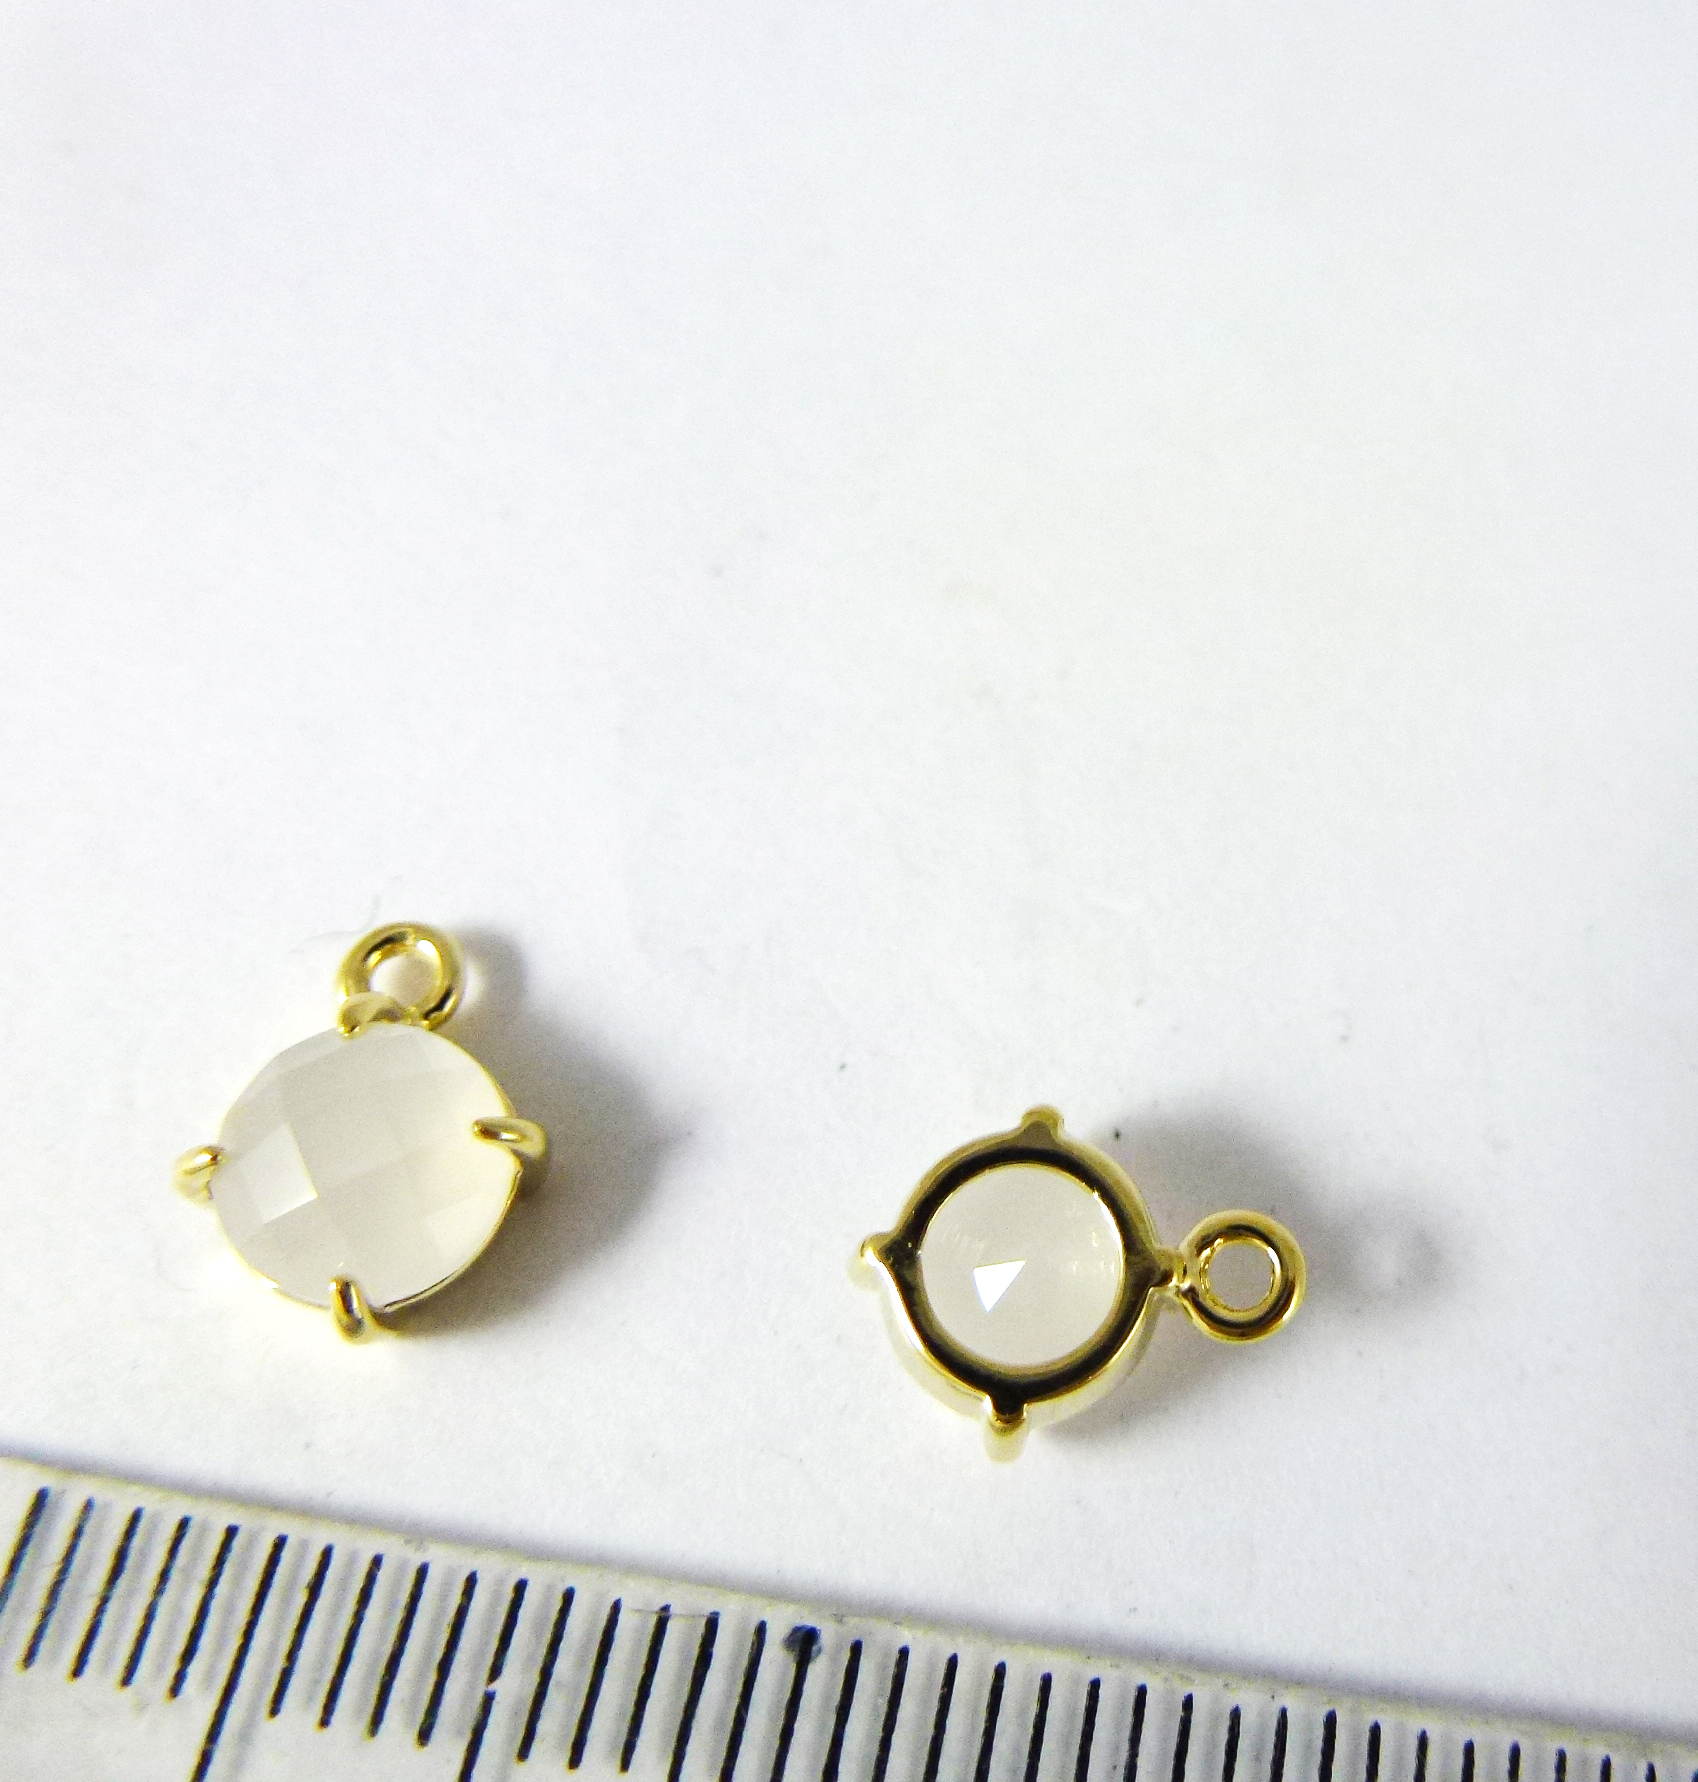 6mm銅鍍金色單孔四爪圓形誕生石-六月月光石